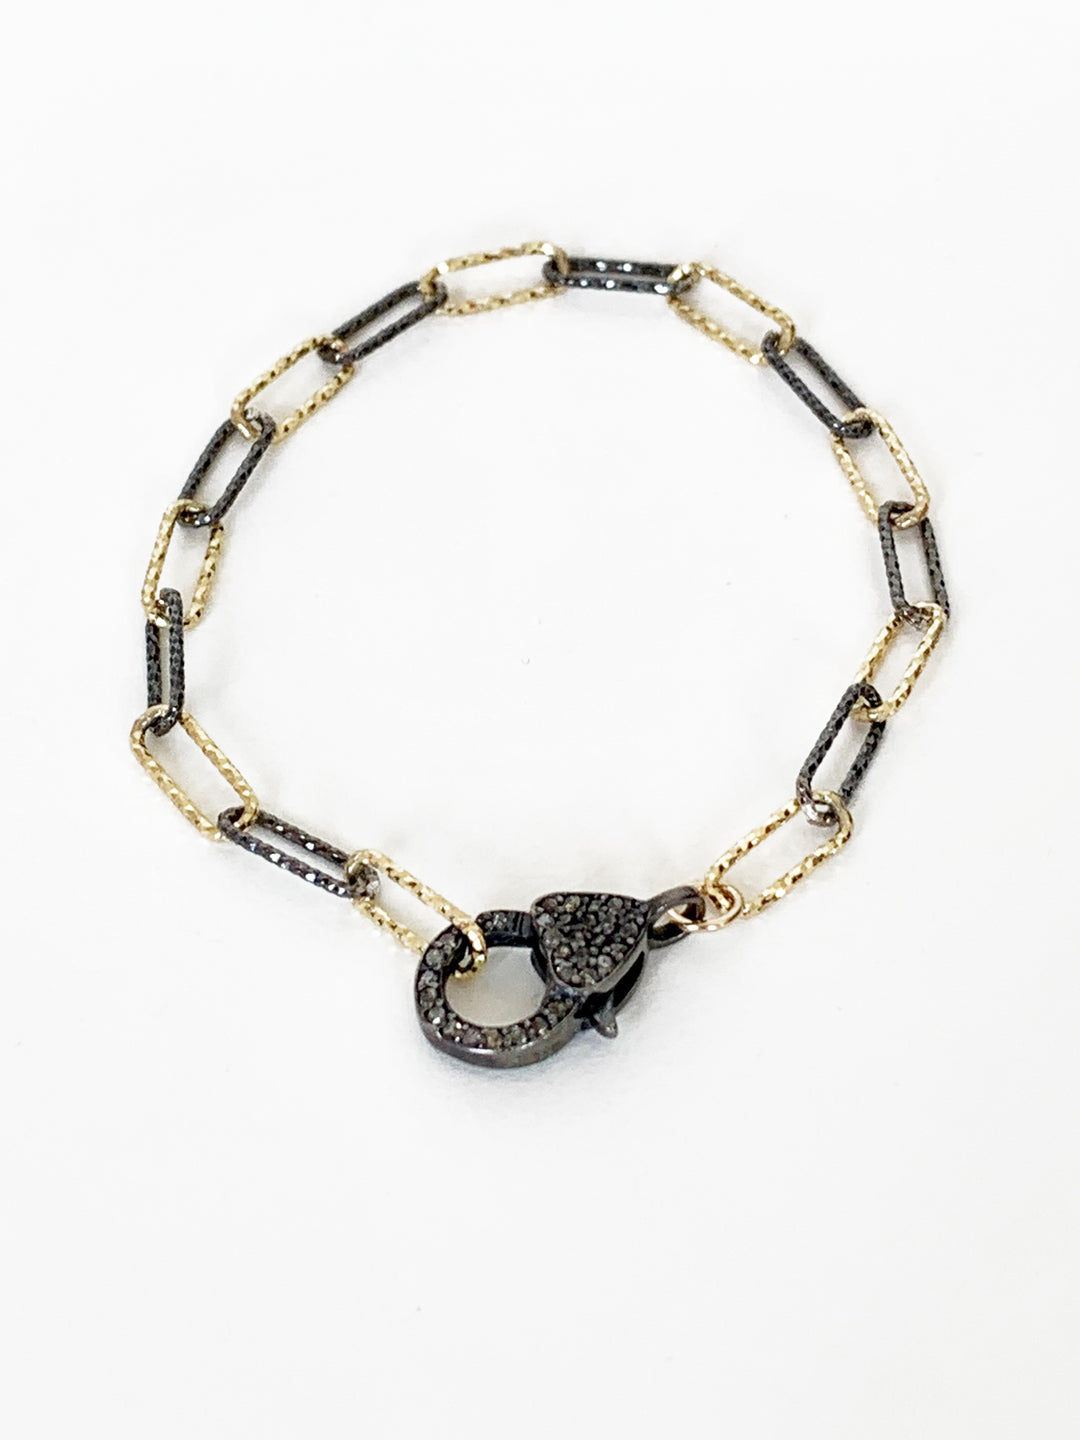 Diamond Heart Clasp Bracelet - Kingfisher Road - Online Boutique